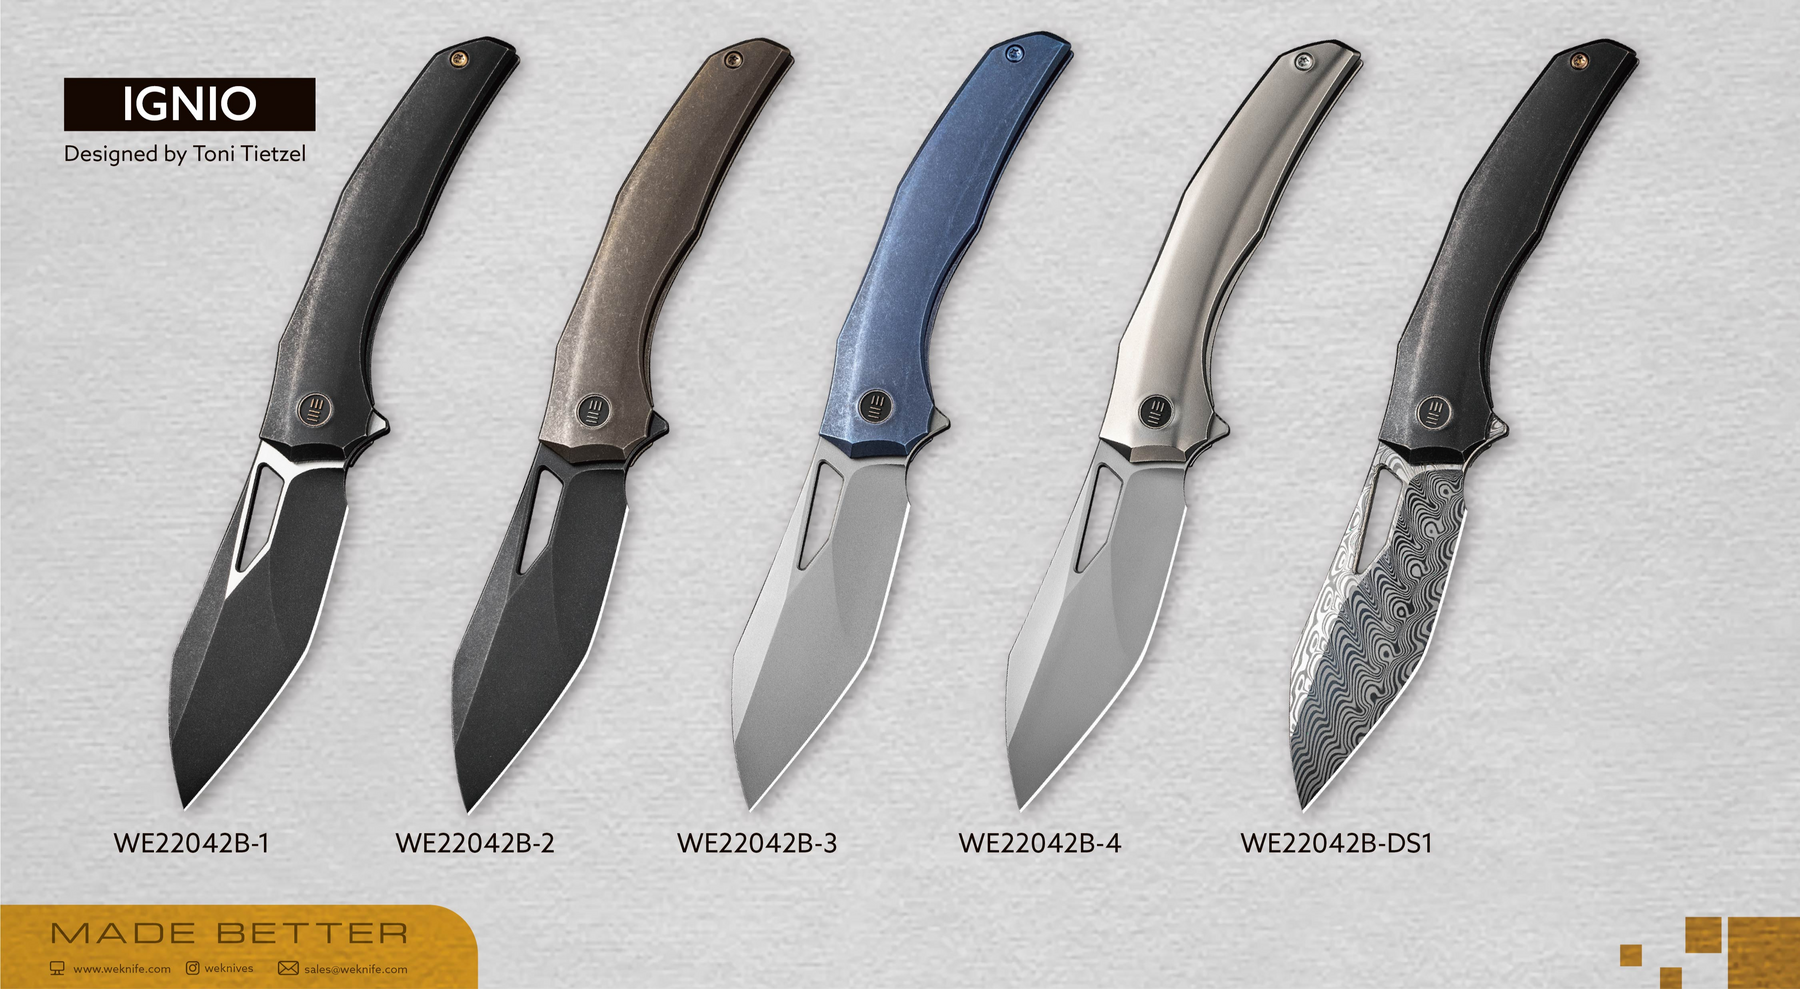 The Ultimate EDC Companion: We Knife Co. Ignio Pocket Knife